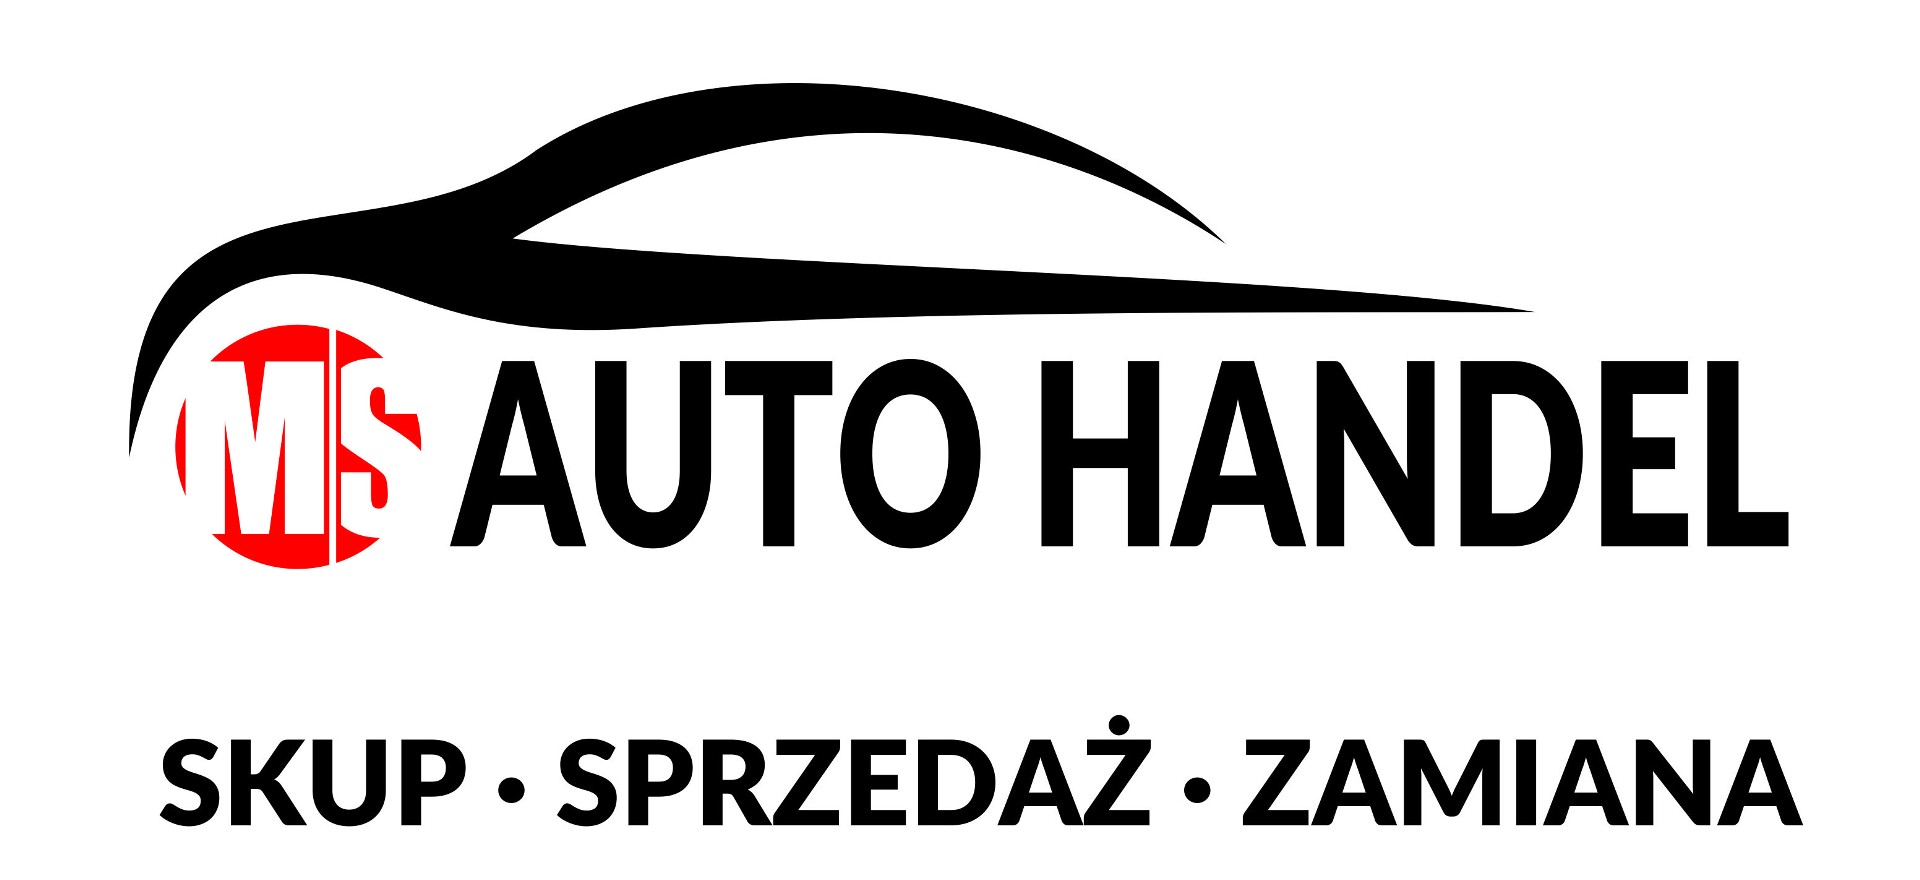 MS Auto Handel  logo